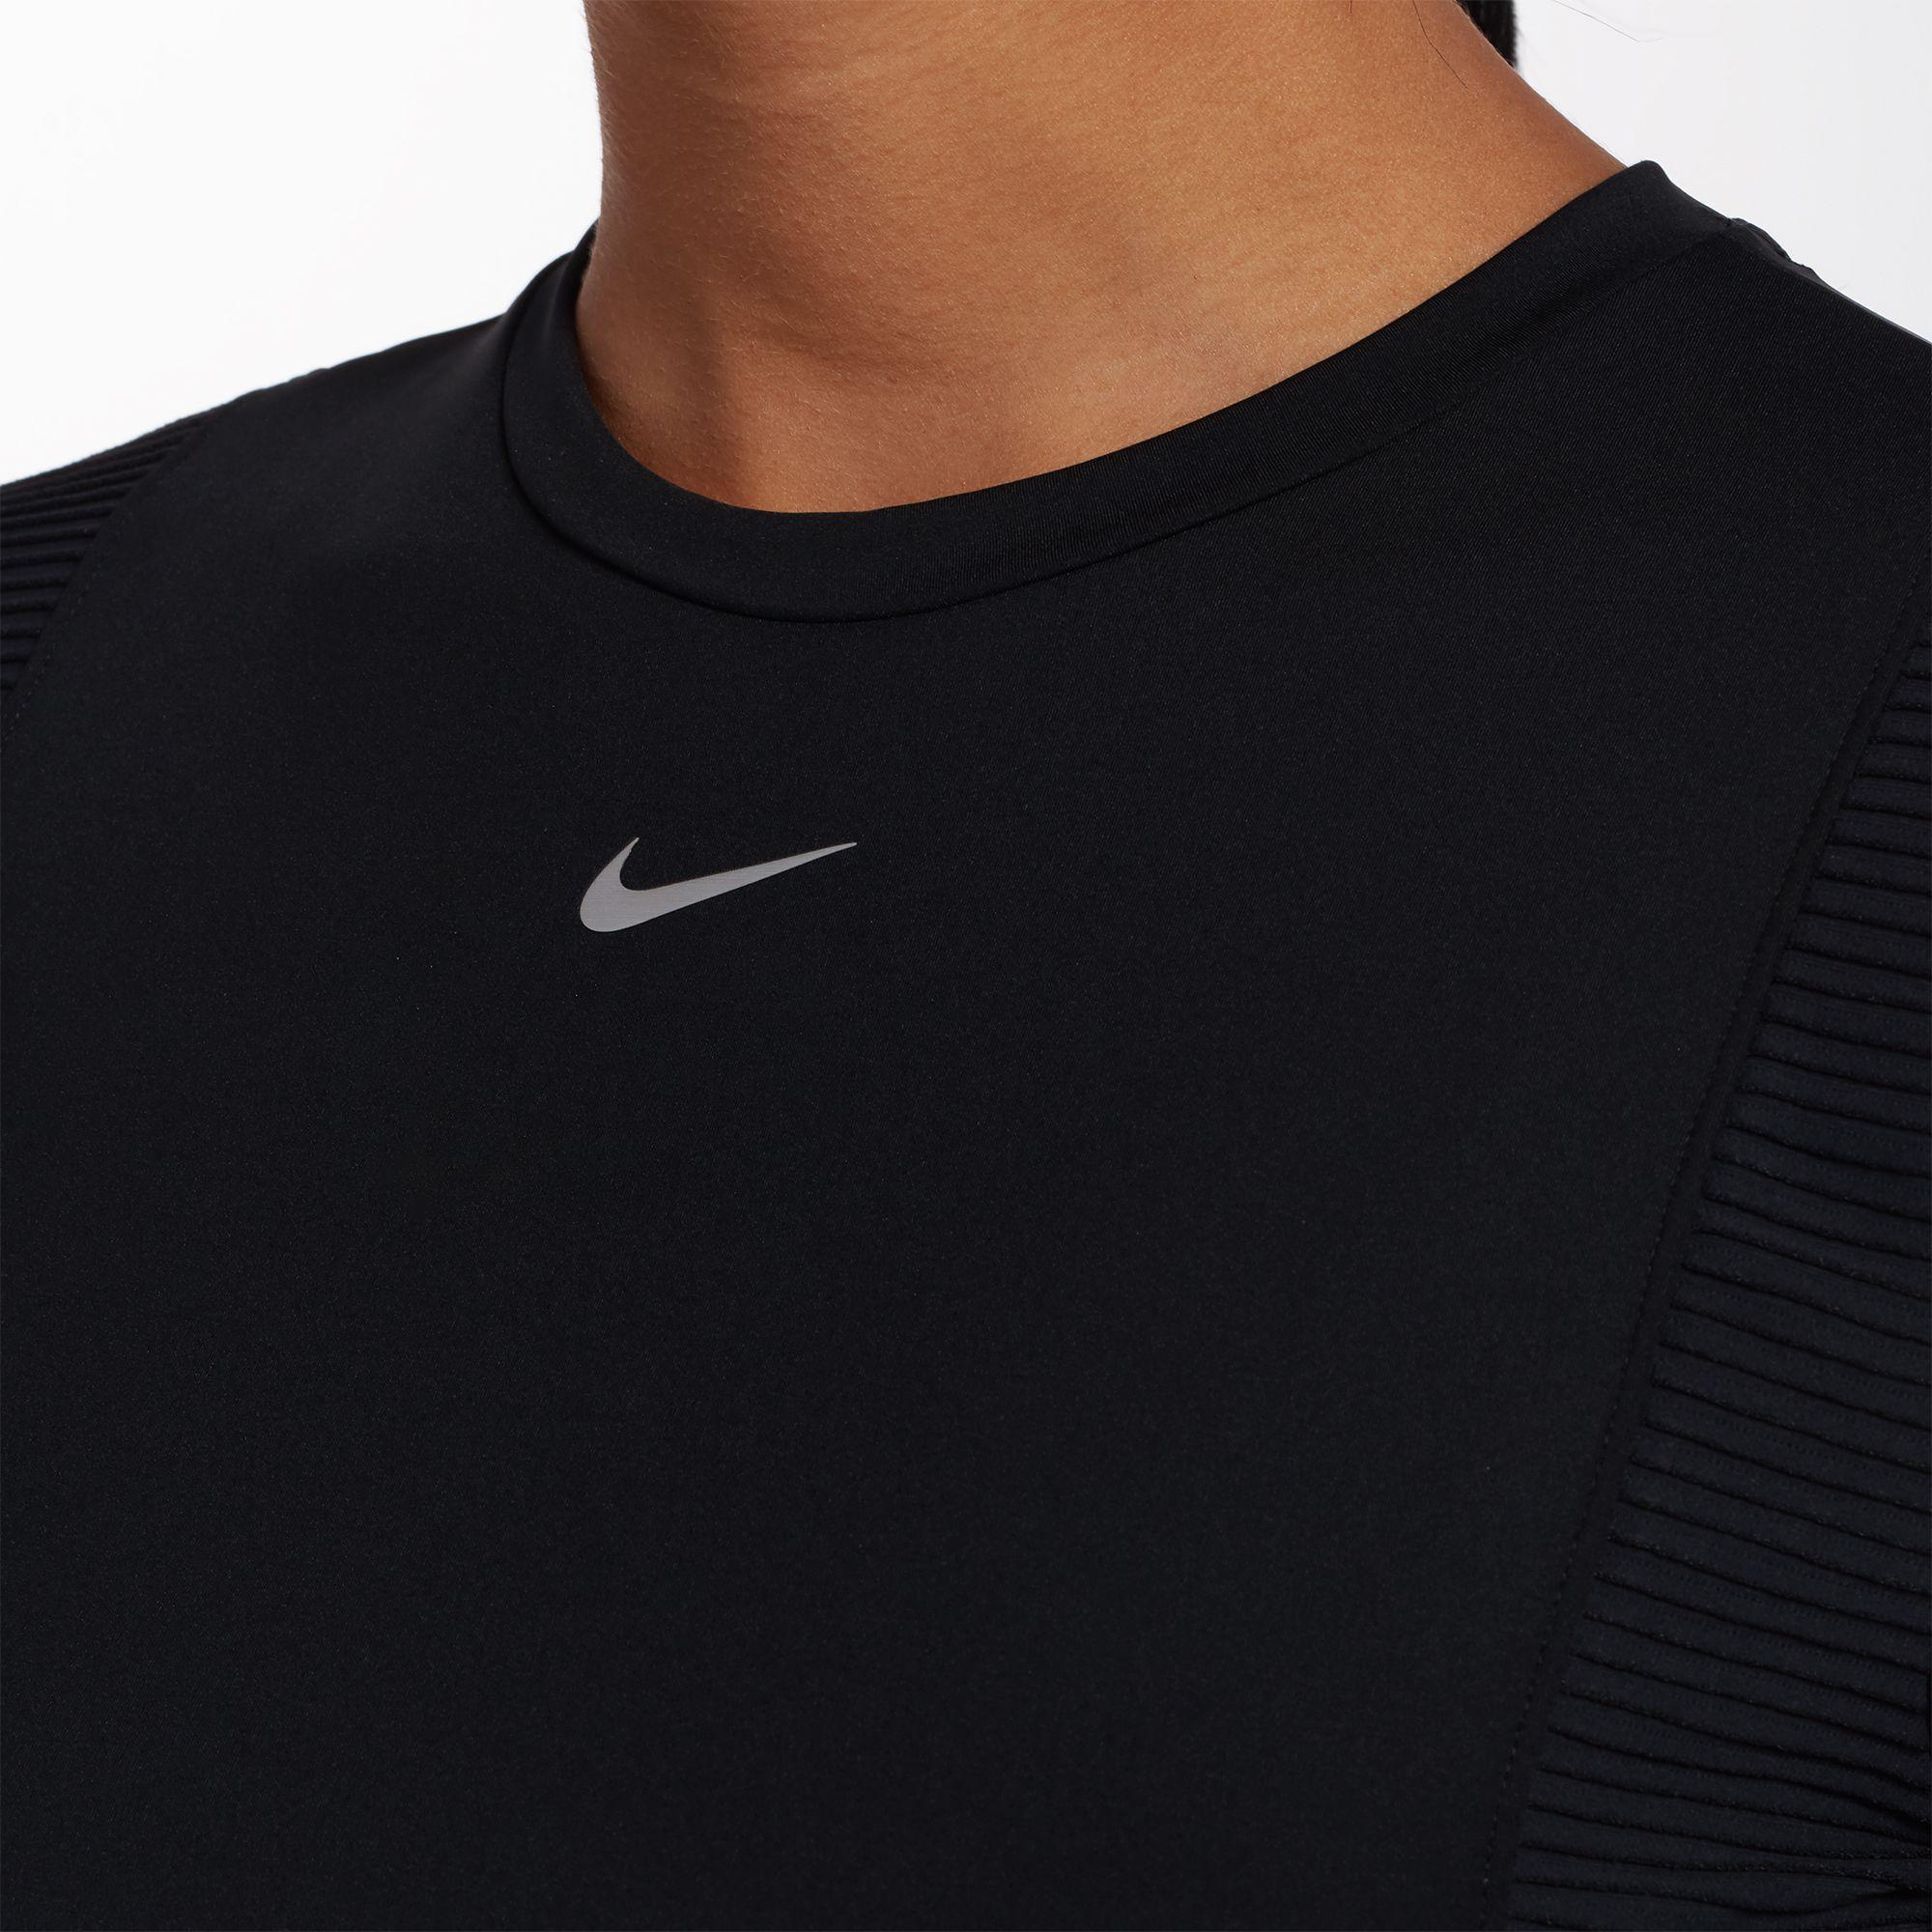 Nike Aeroadapt Pro Cropped Long Sleeve Shirt in Black - Lyst